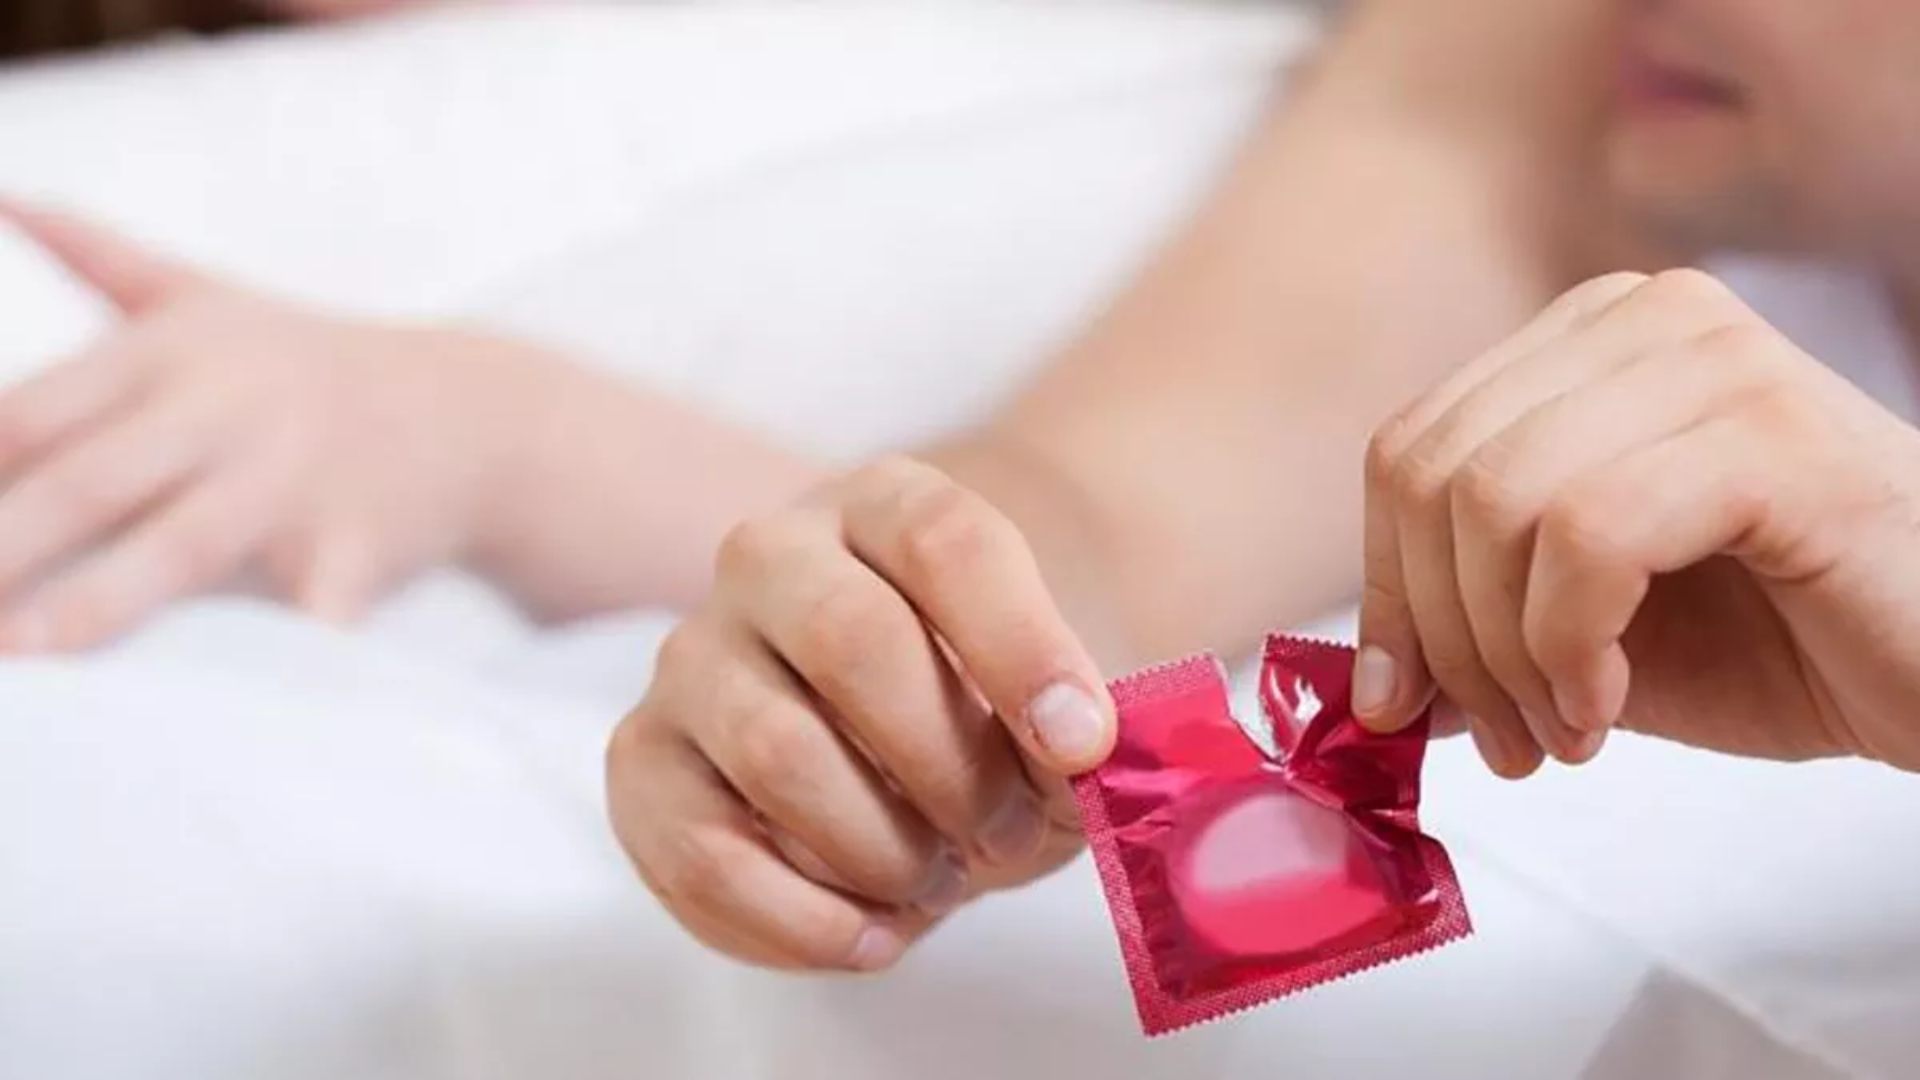 Cinco pasos para usar correctamente el condón